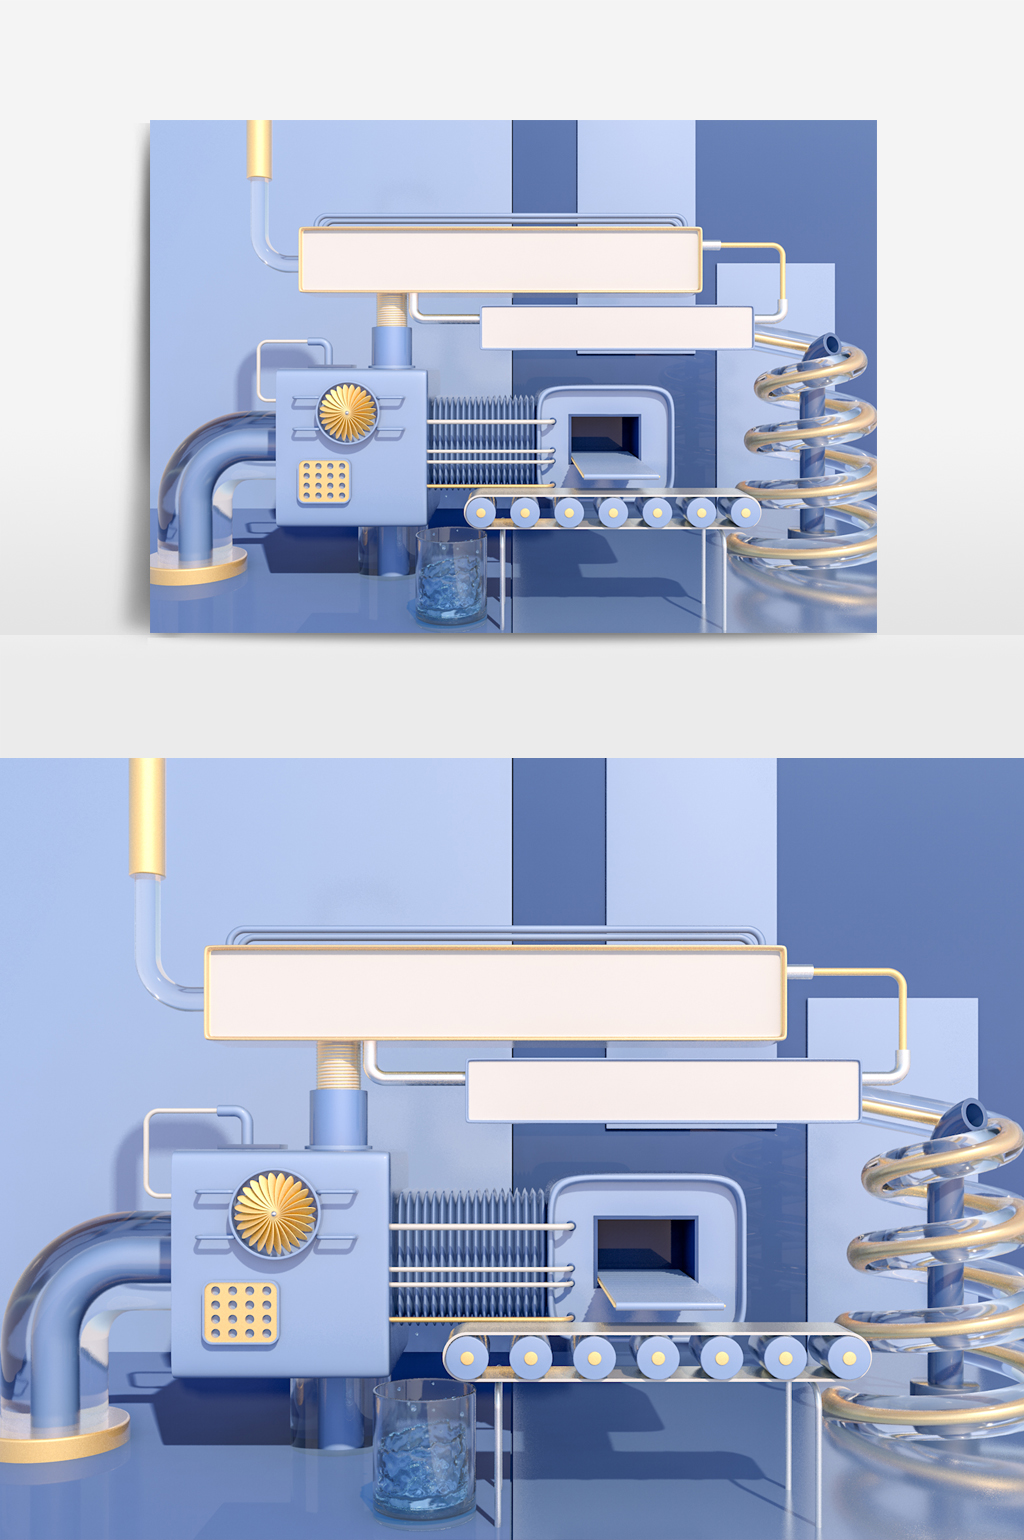   C4D模型创意立体传输机器蓝色工厂038.jpg